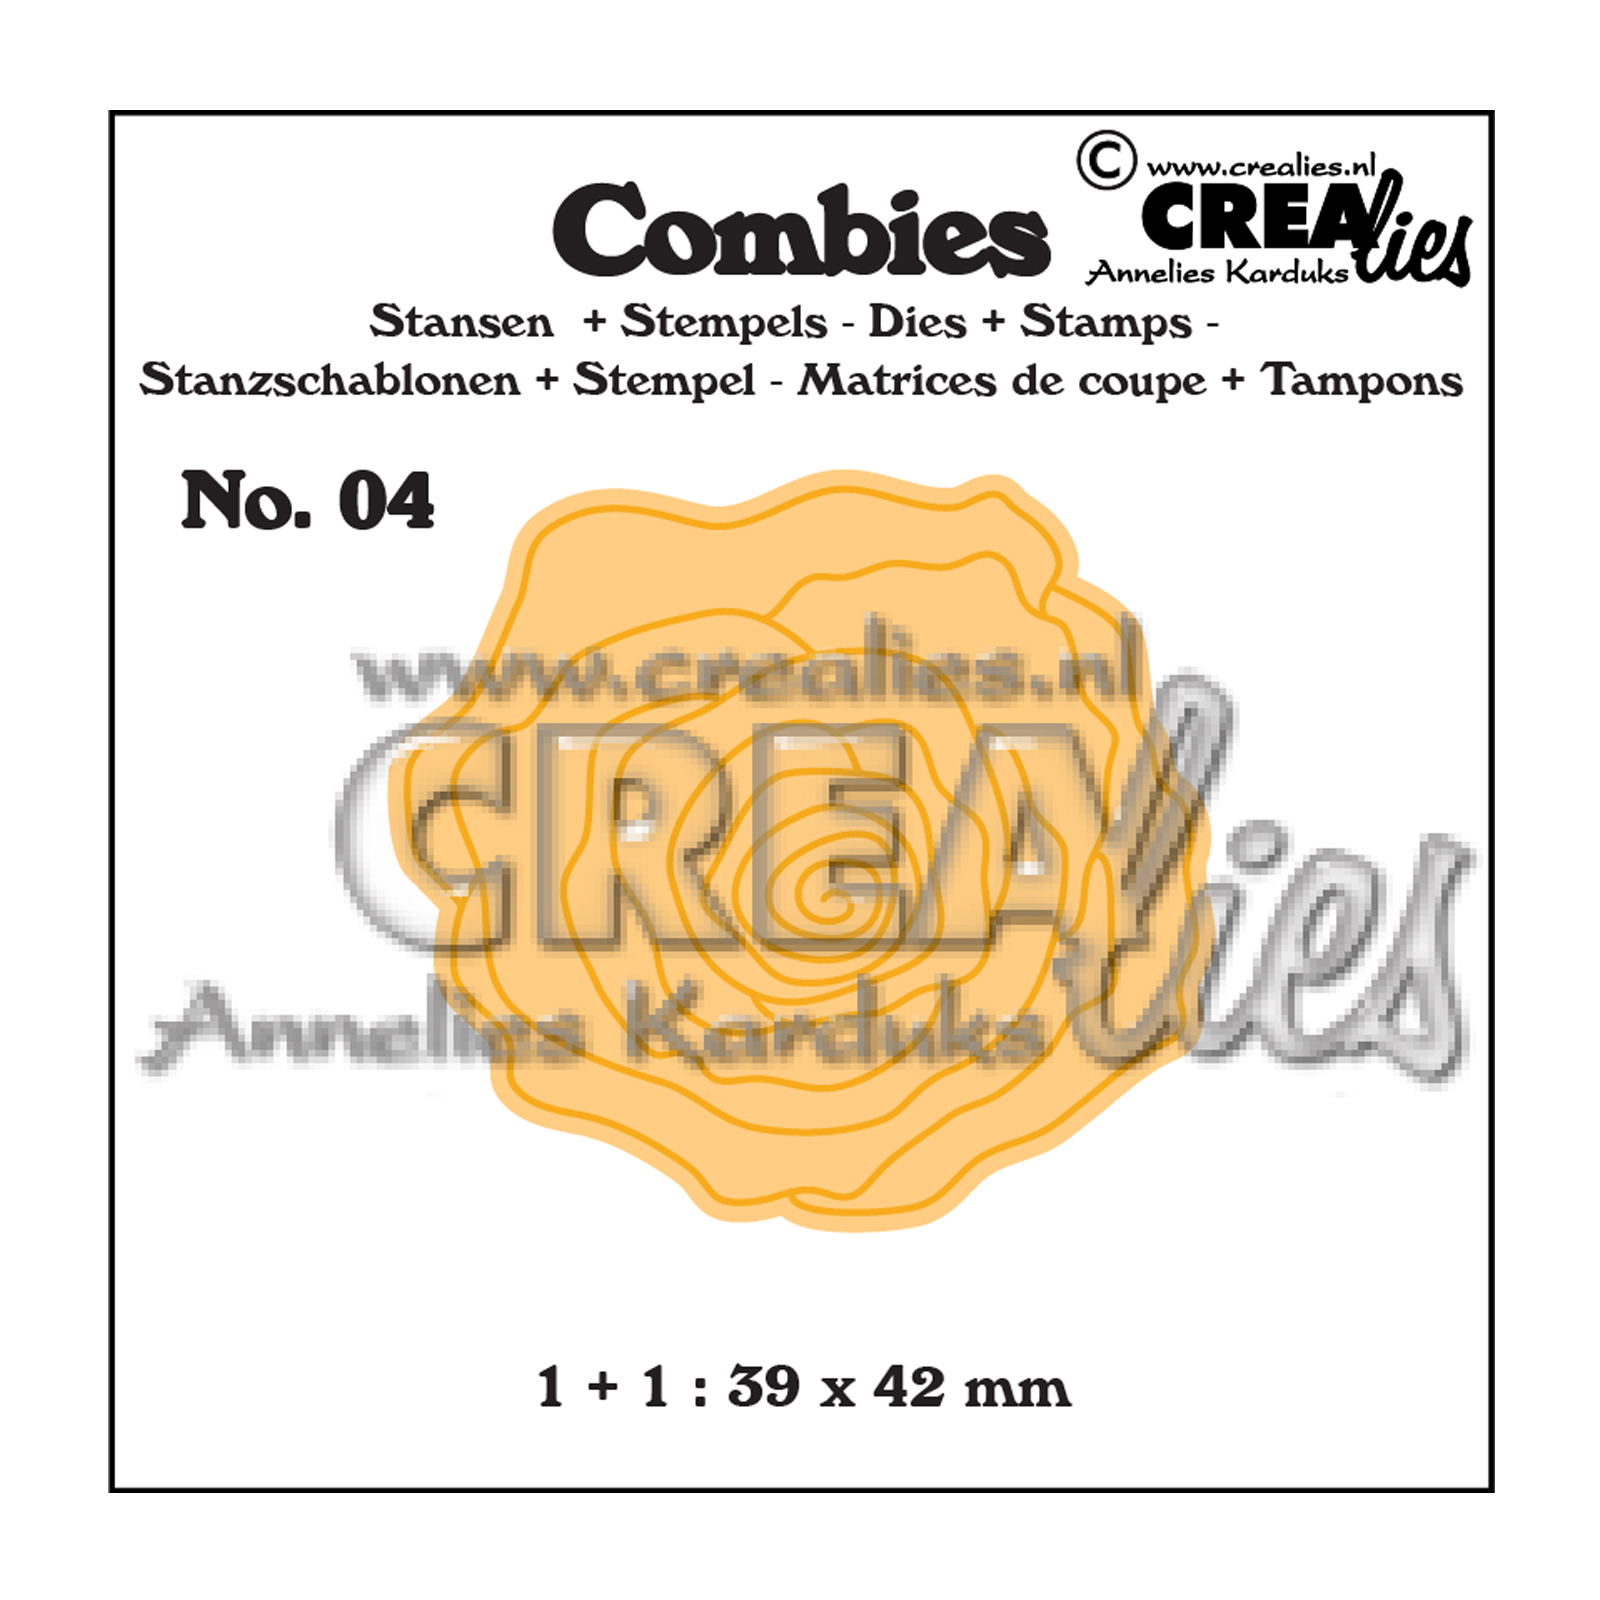 Crealies • Combies matrice de découpe & tampon set no.04 Roses